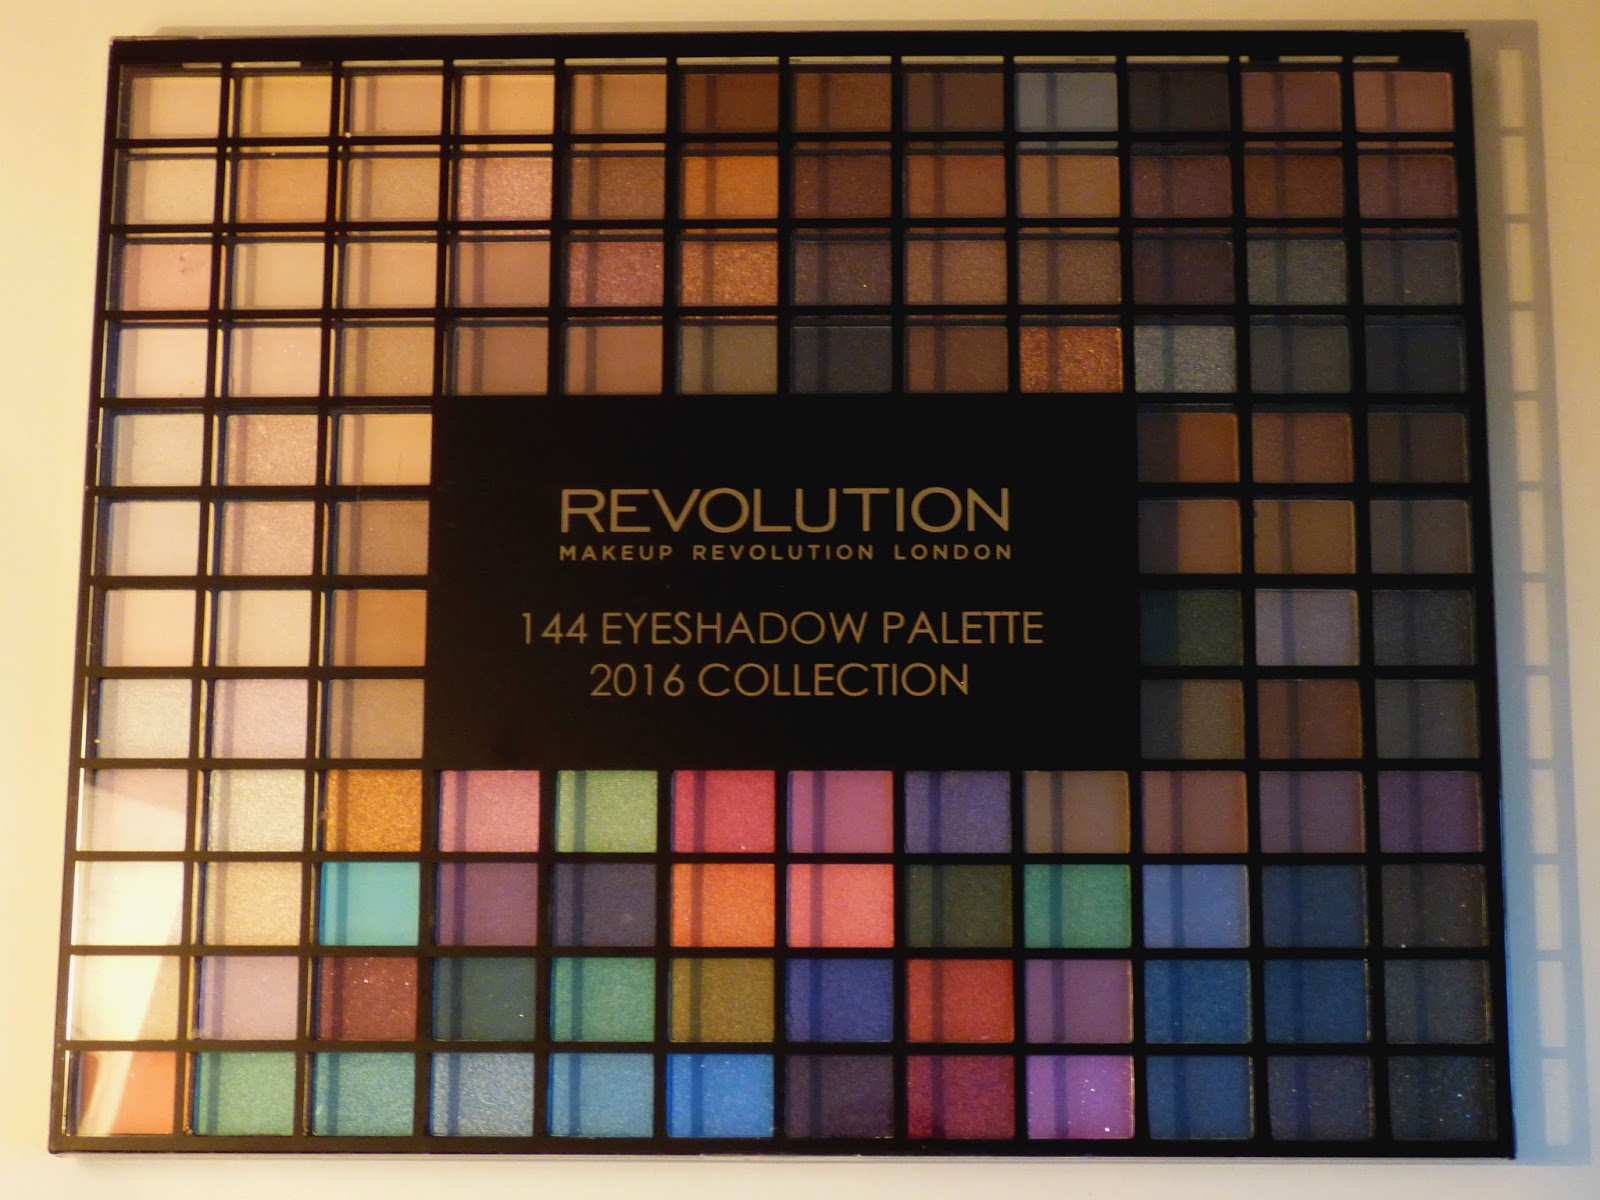 Makeup revolution 144 eyeshadow palette